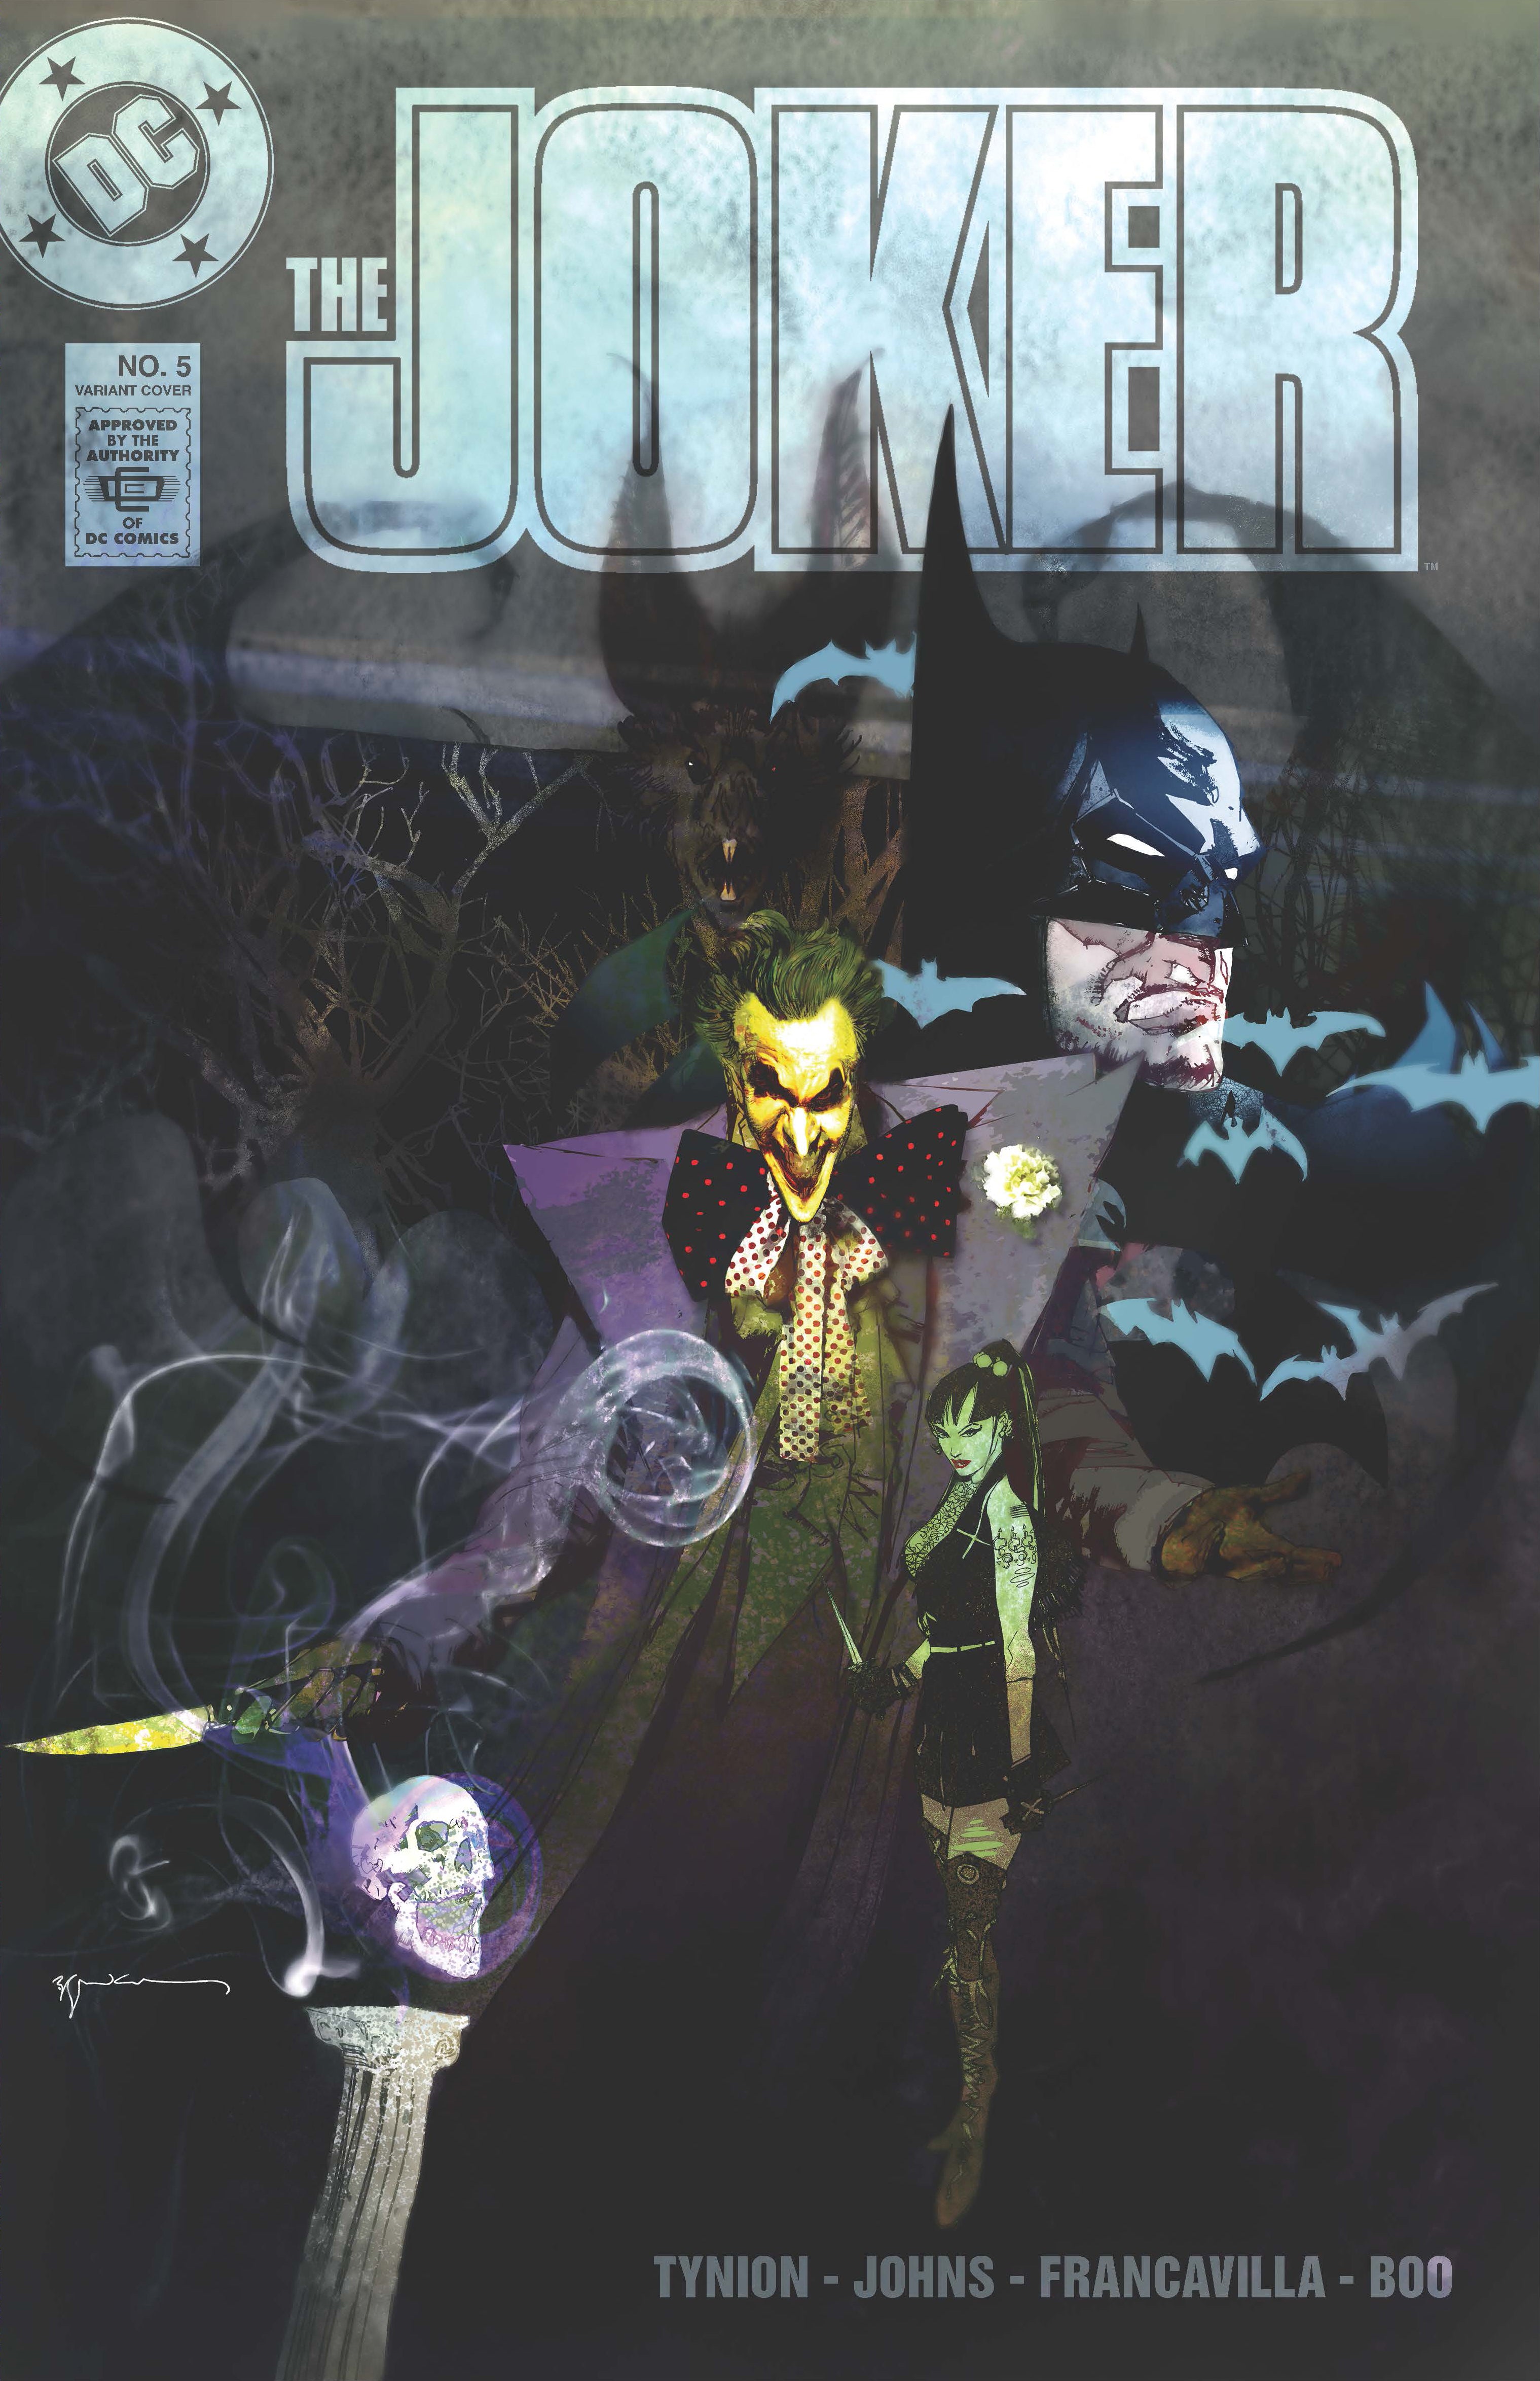 Joker #5 Bill Sienkiewicz Exclusive Cover - State of Comics